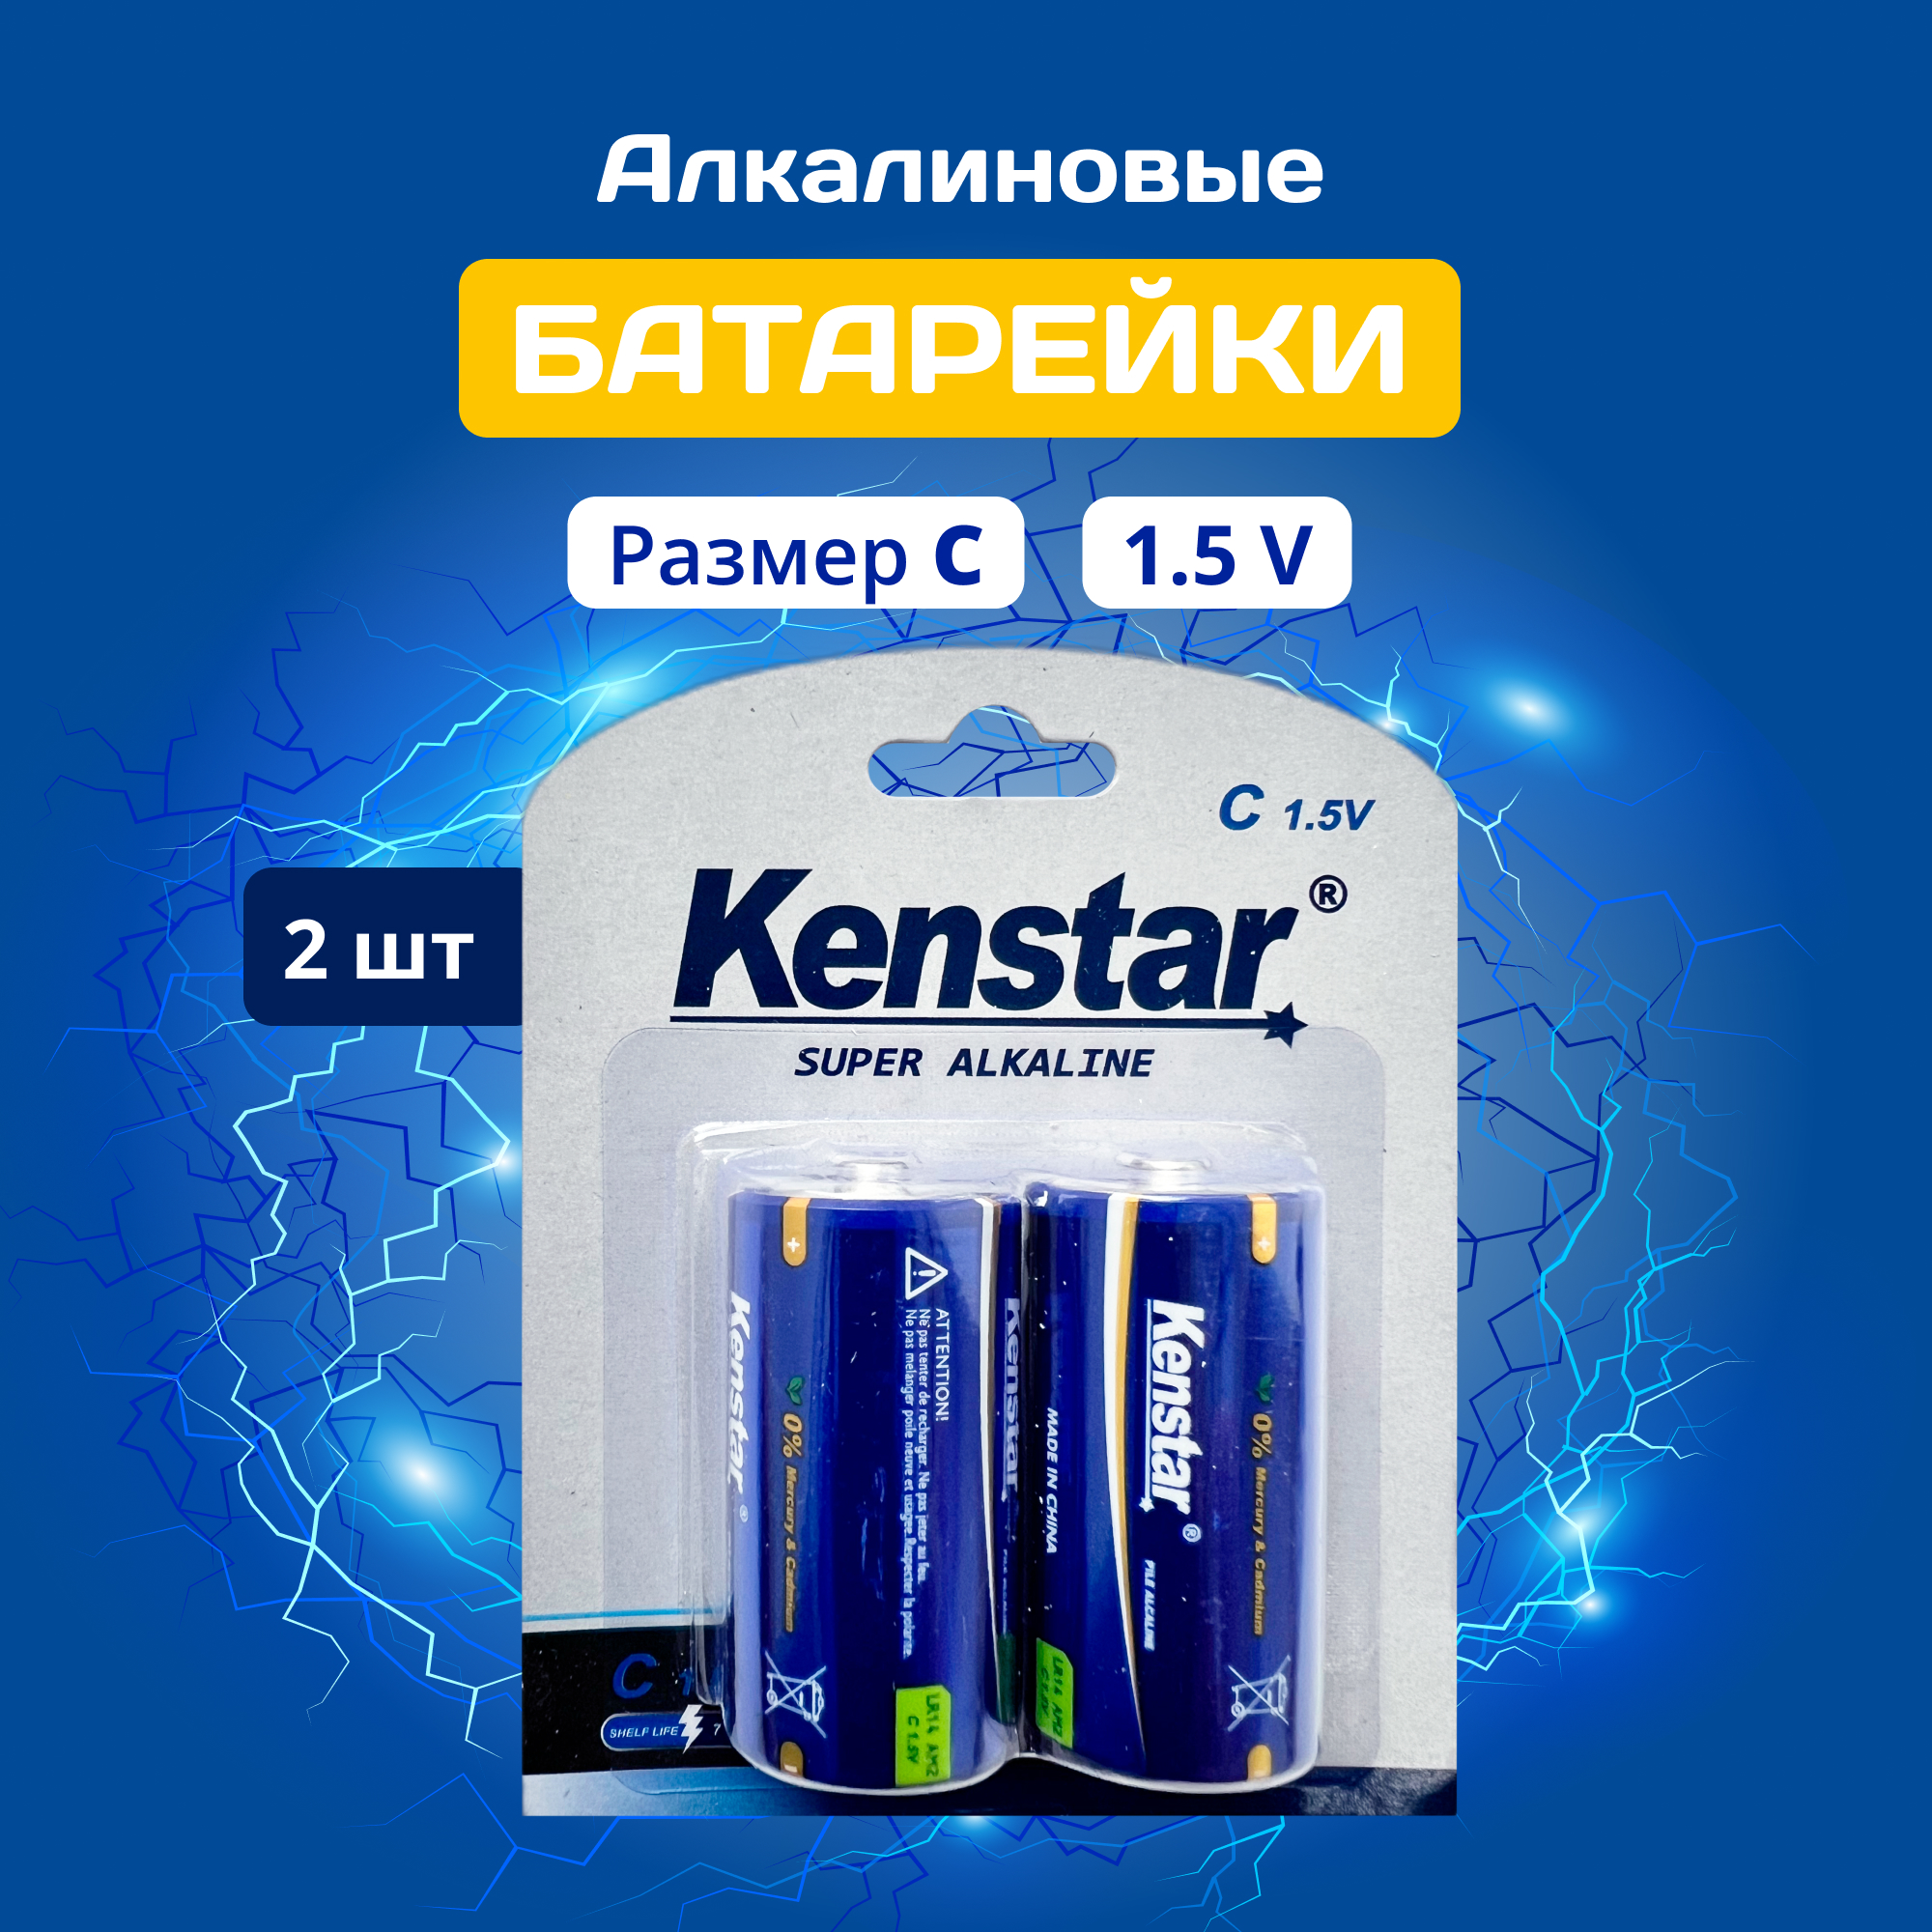 Батарейки KenStar алкалиновые С LR14/C 4500 mAh, 2 шт алкалиновые пуговичные батарейки gp